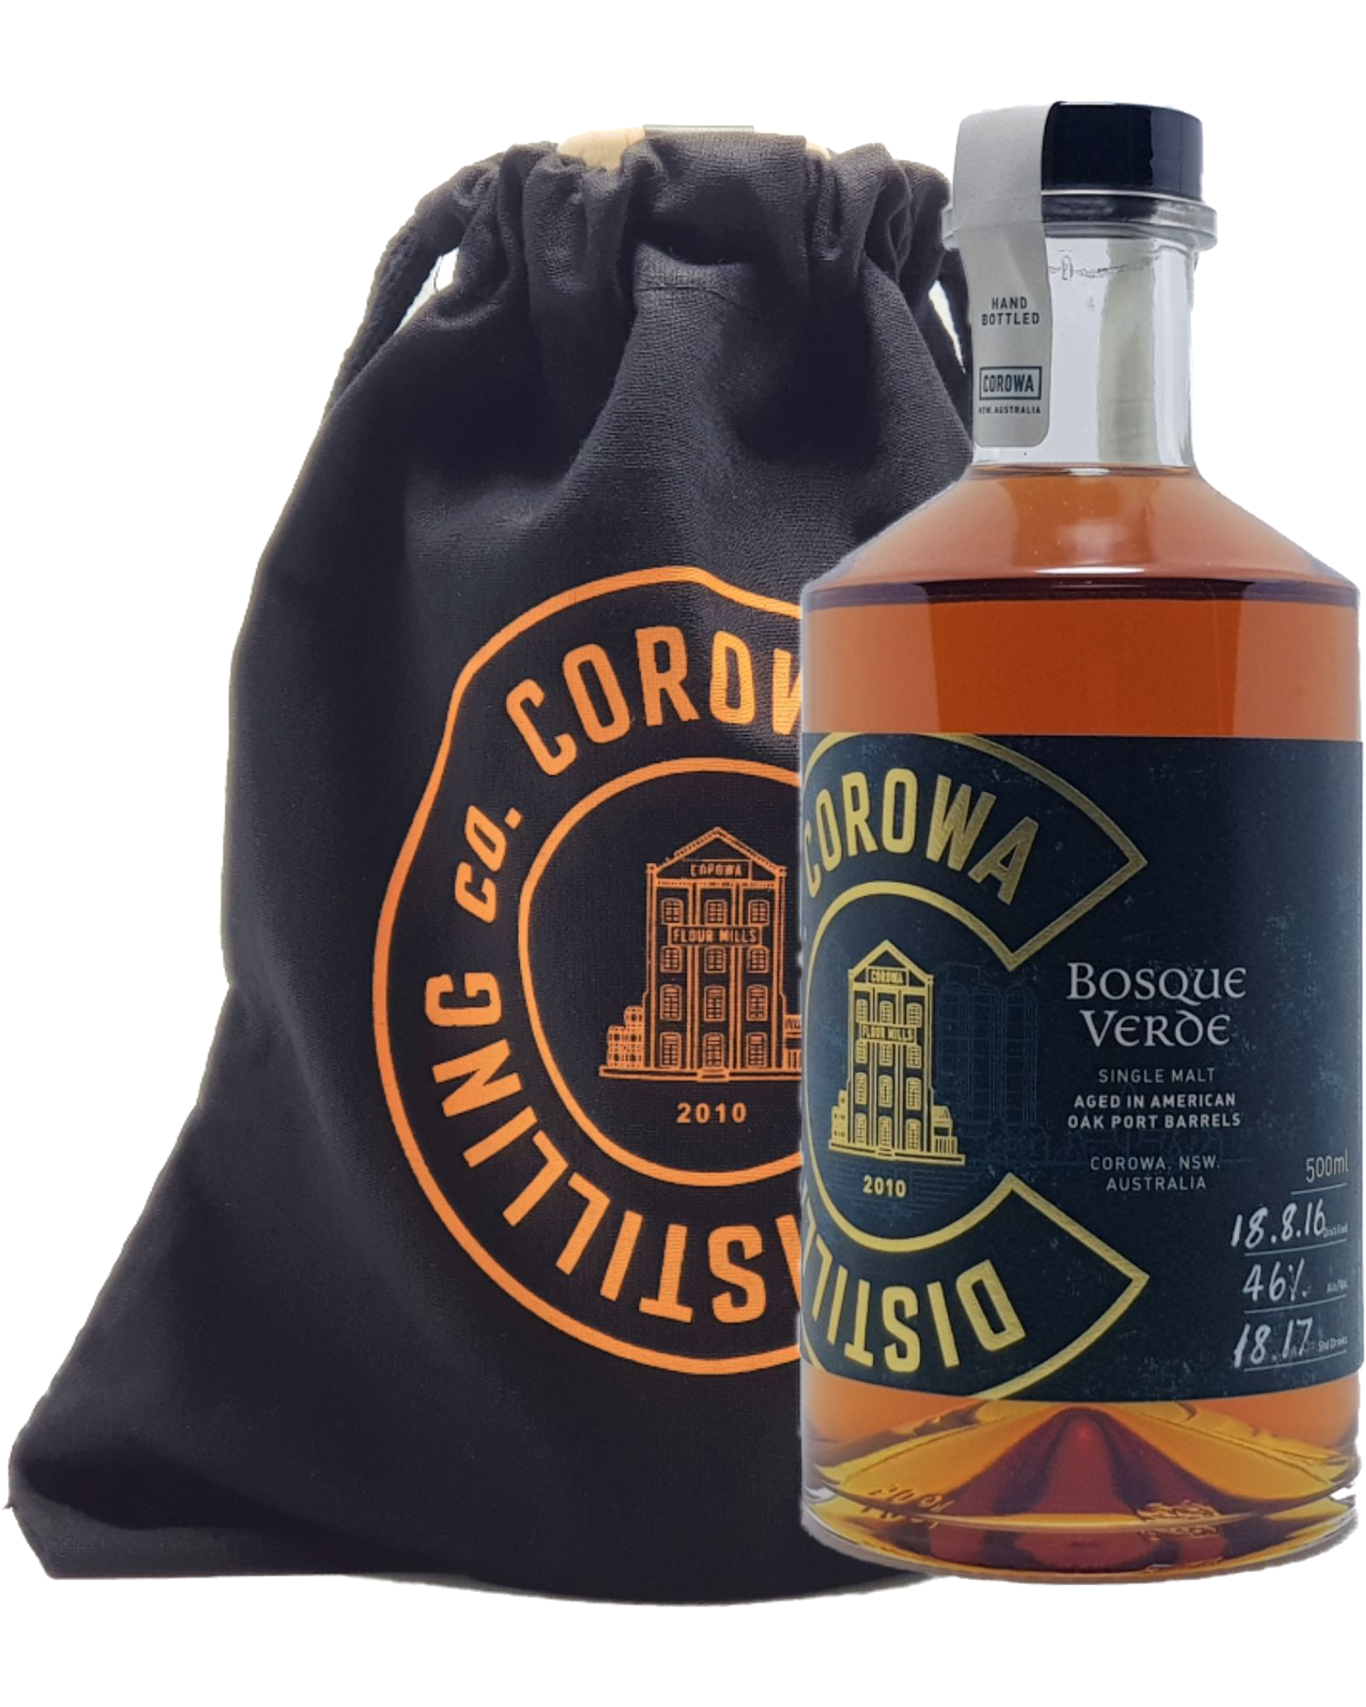 Corowa Bosque Verde Single Malt Whisky - Bottle (500ml)